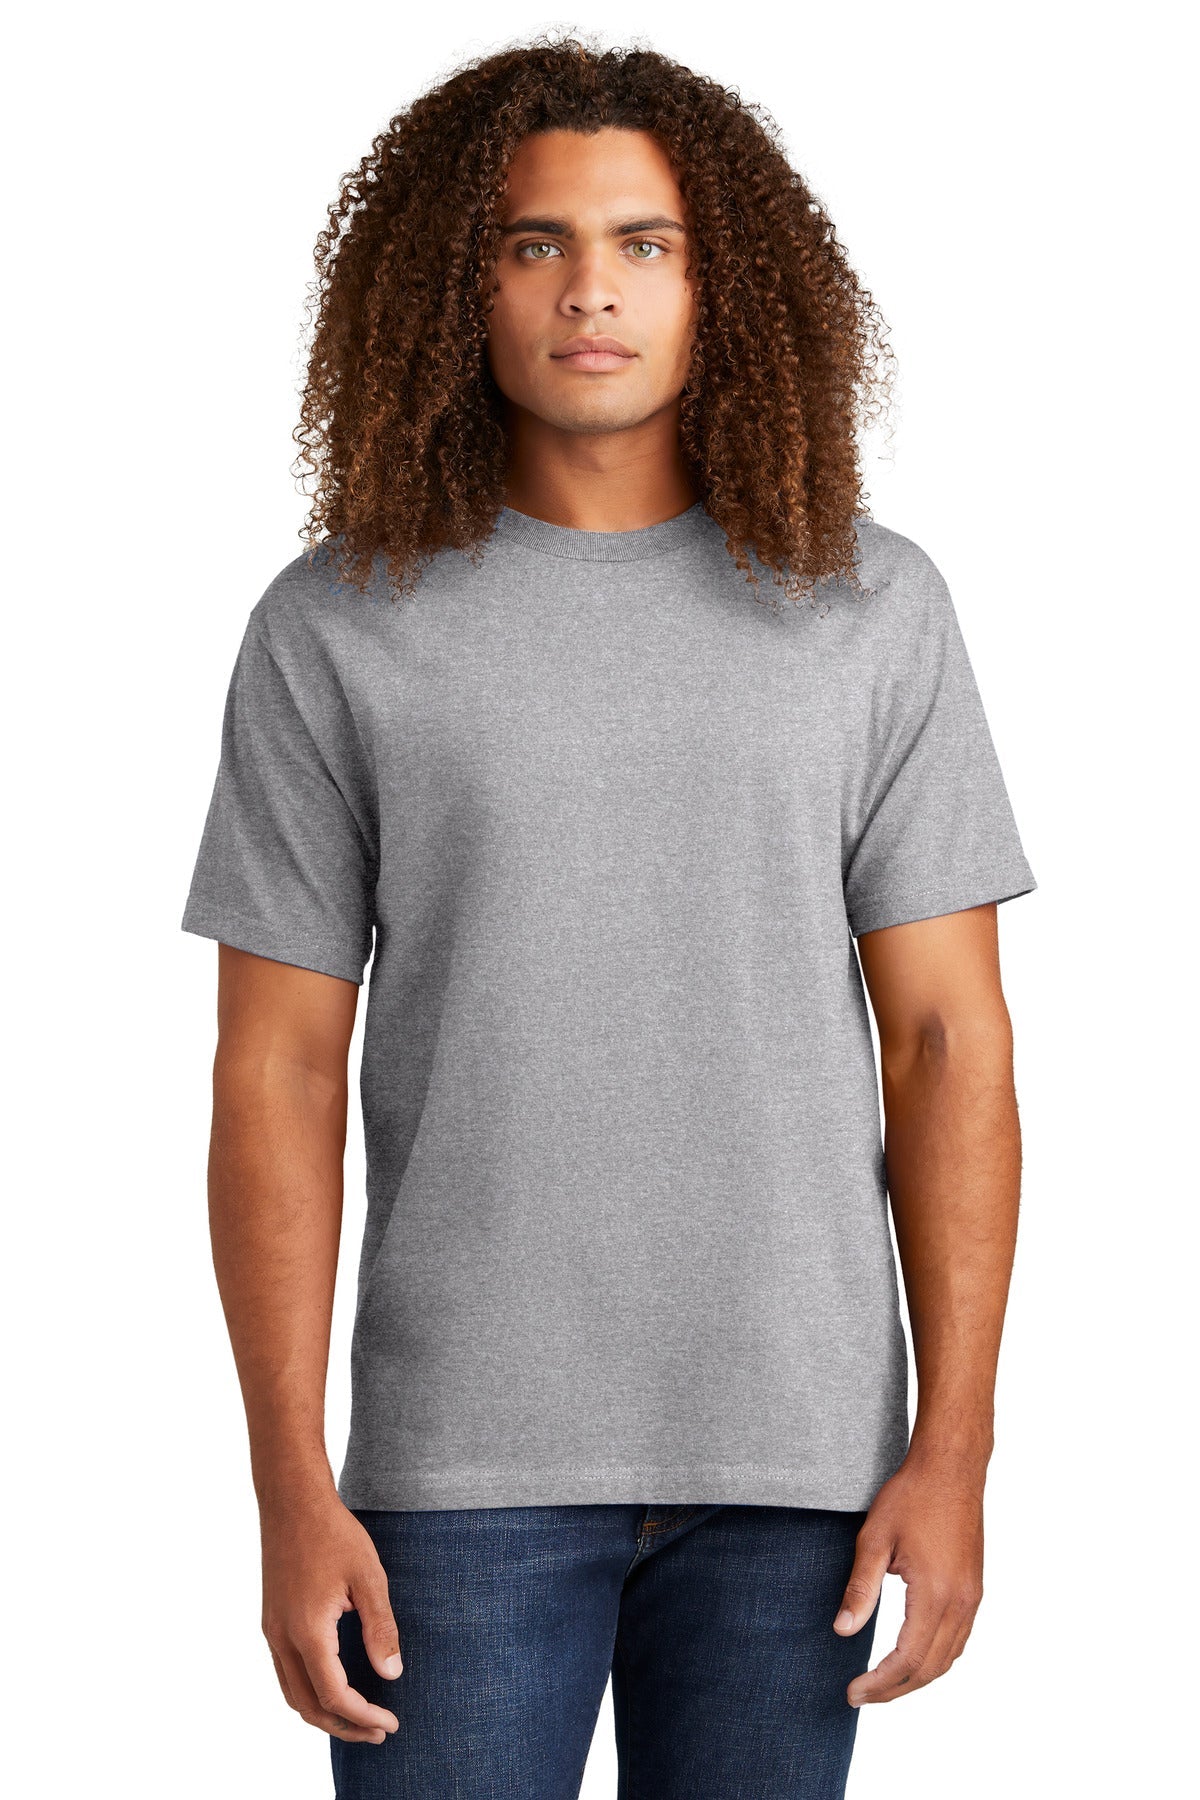 American Apparel® Relaxed T-Shirt 1301W [Heather Grey] - DFW Impression